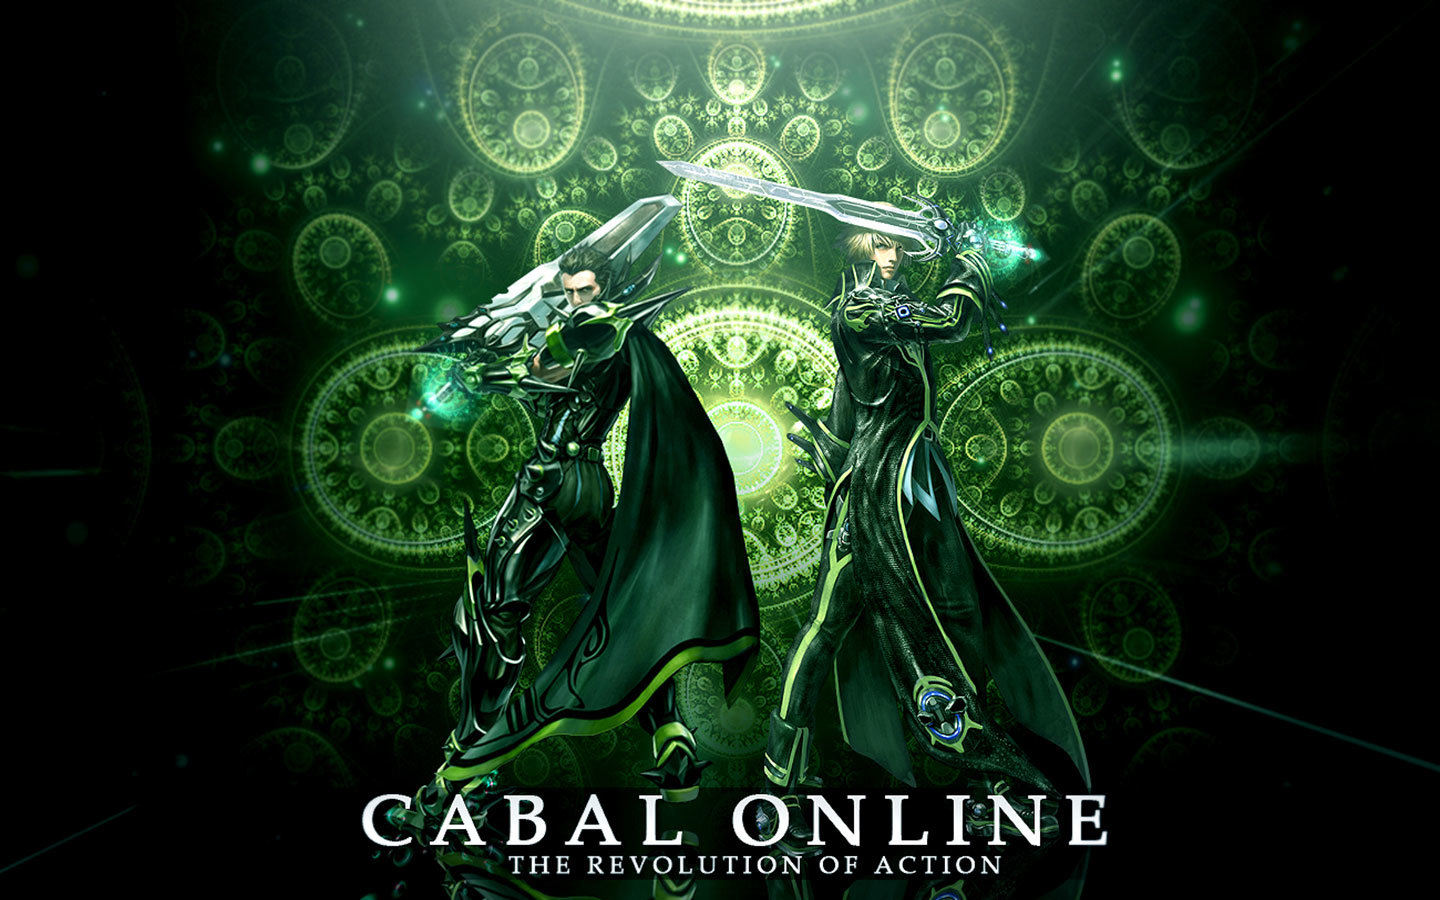 Best Cabal Online wallpaper ID:101562 for High Resolution hd 1440x900 computer